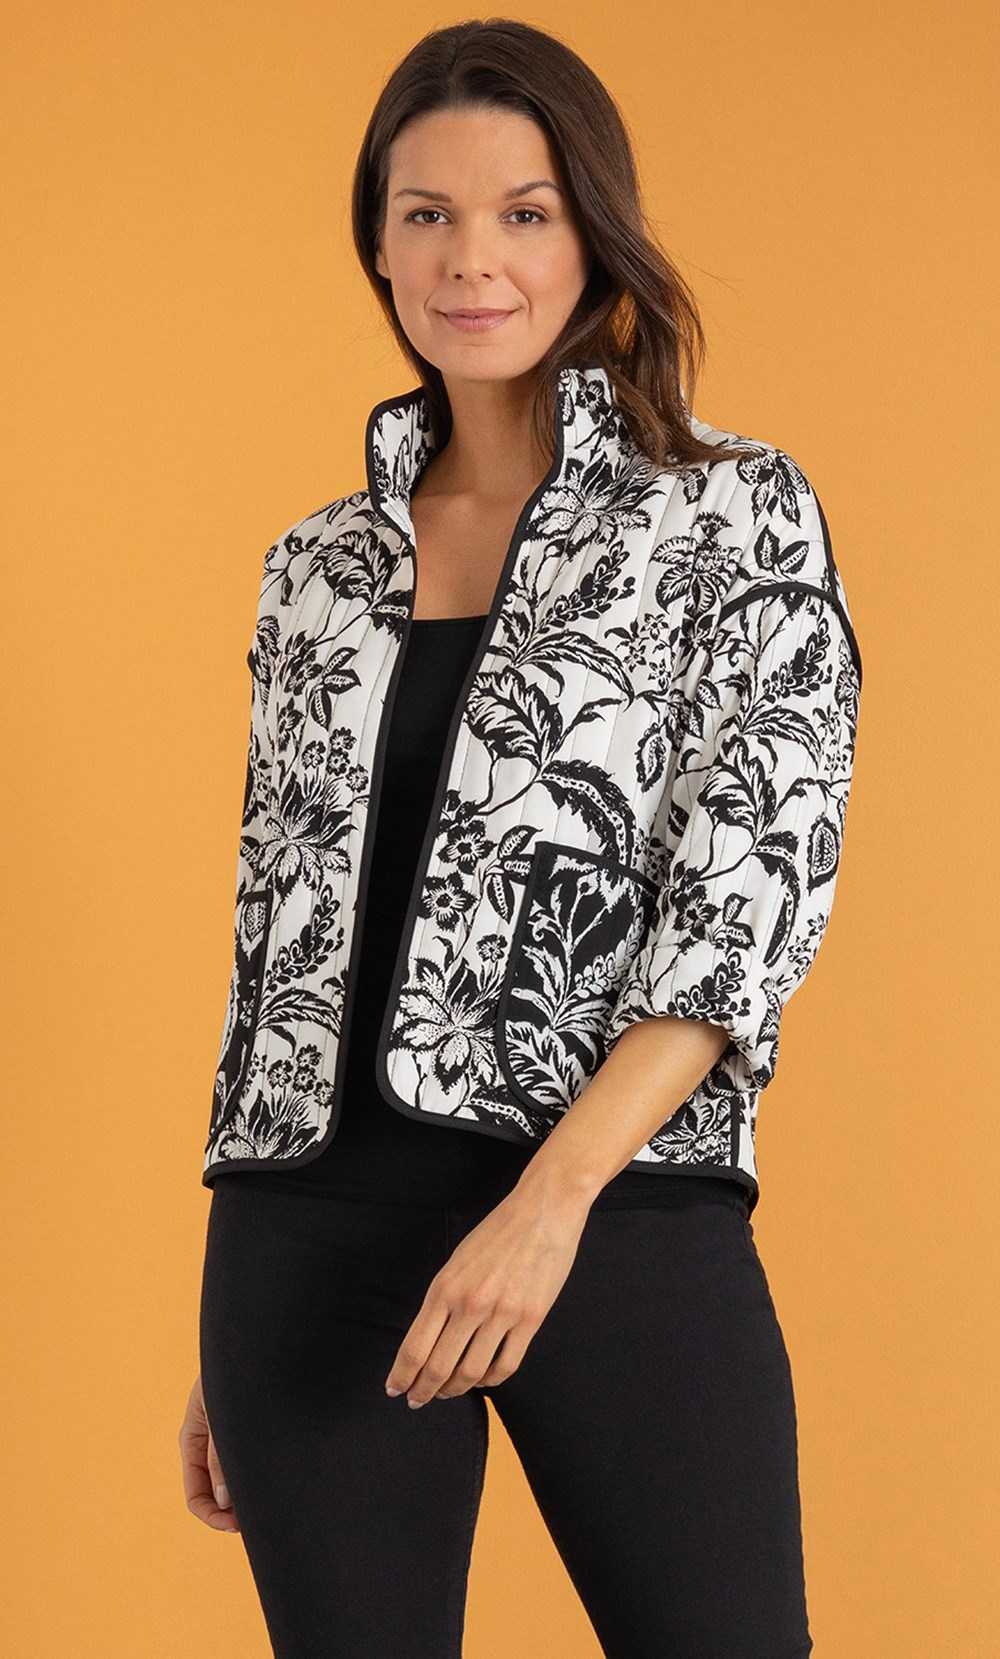 Brands - Klass Botanical Print Quilted Jacket Black/White Women’s